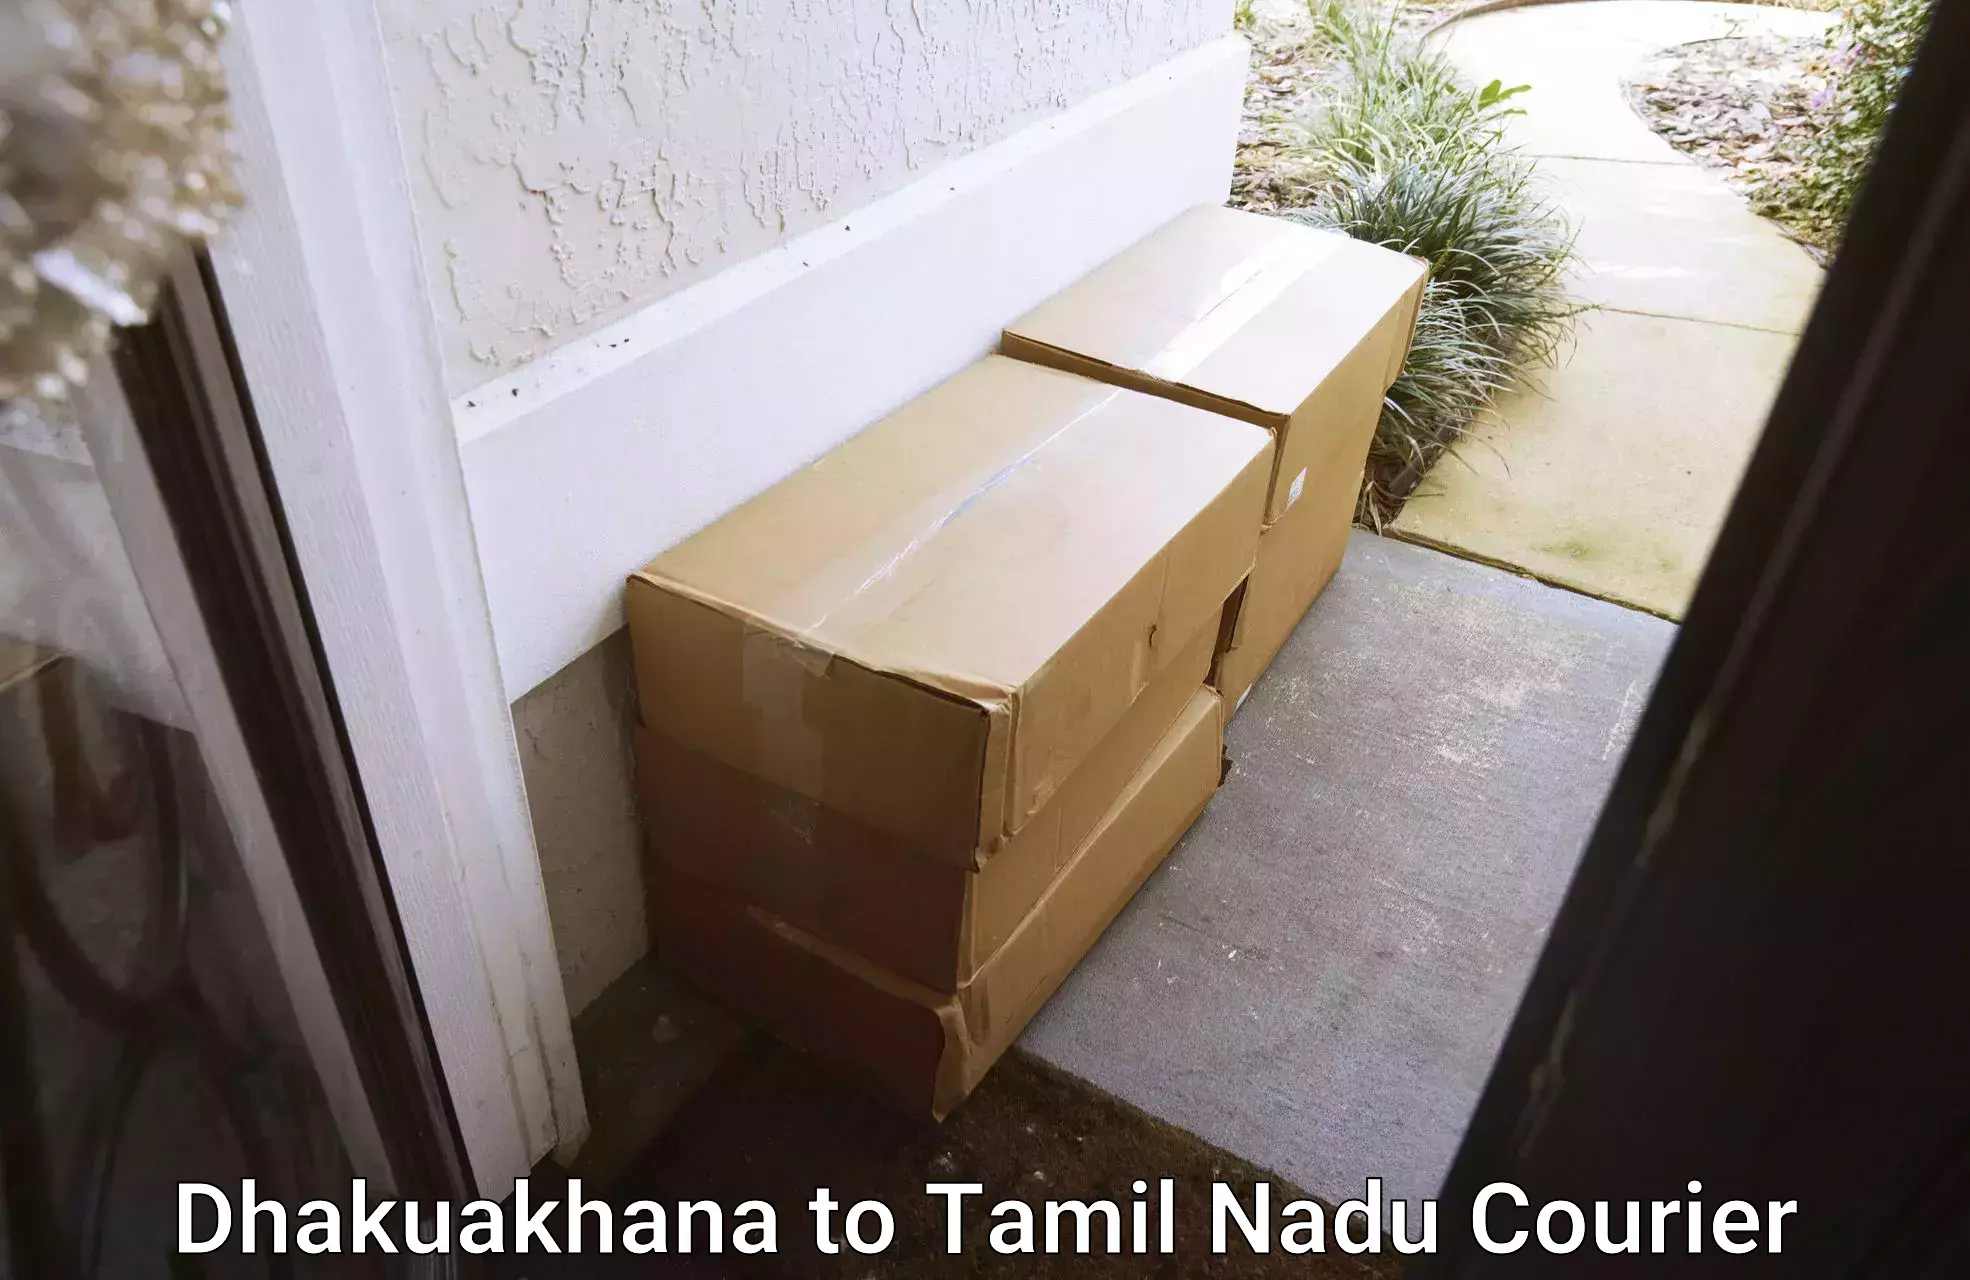 Supply chain efficiency Dhakuakhana to Tamil Nadu